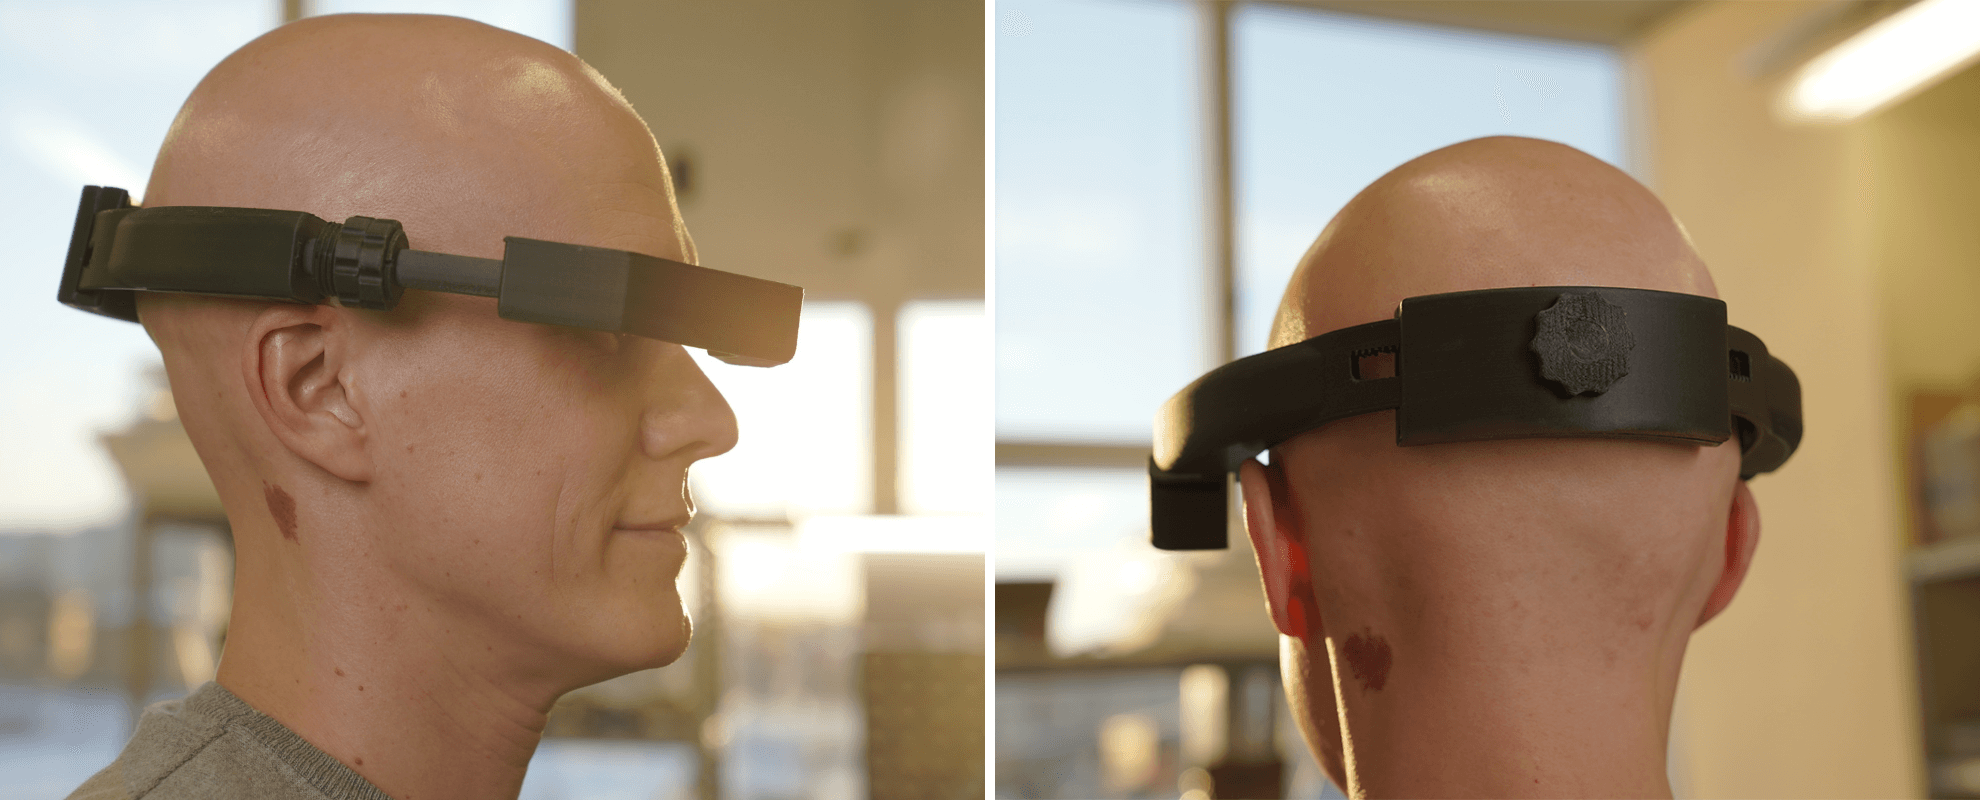 fiber 3D printed virtual reality glasses.